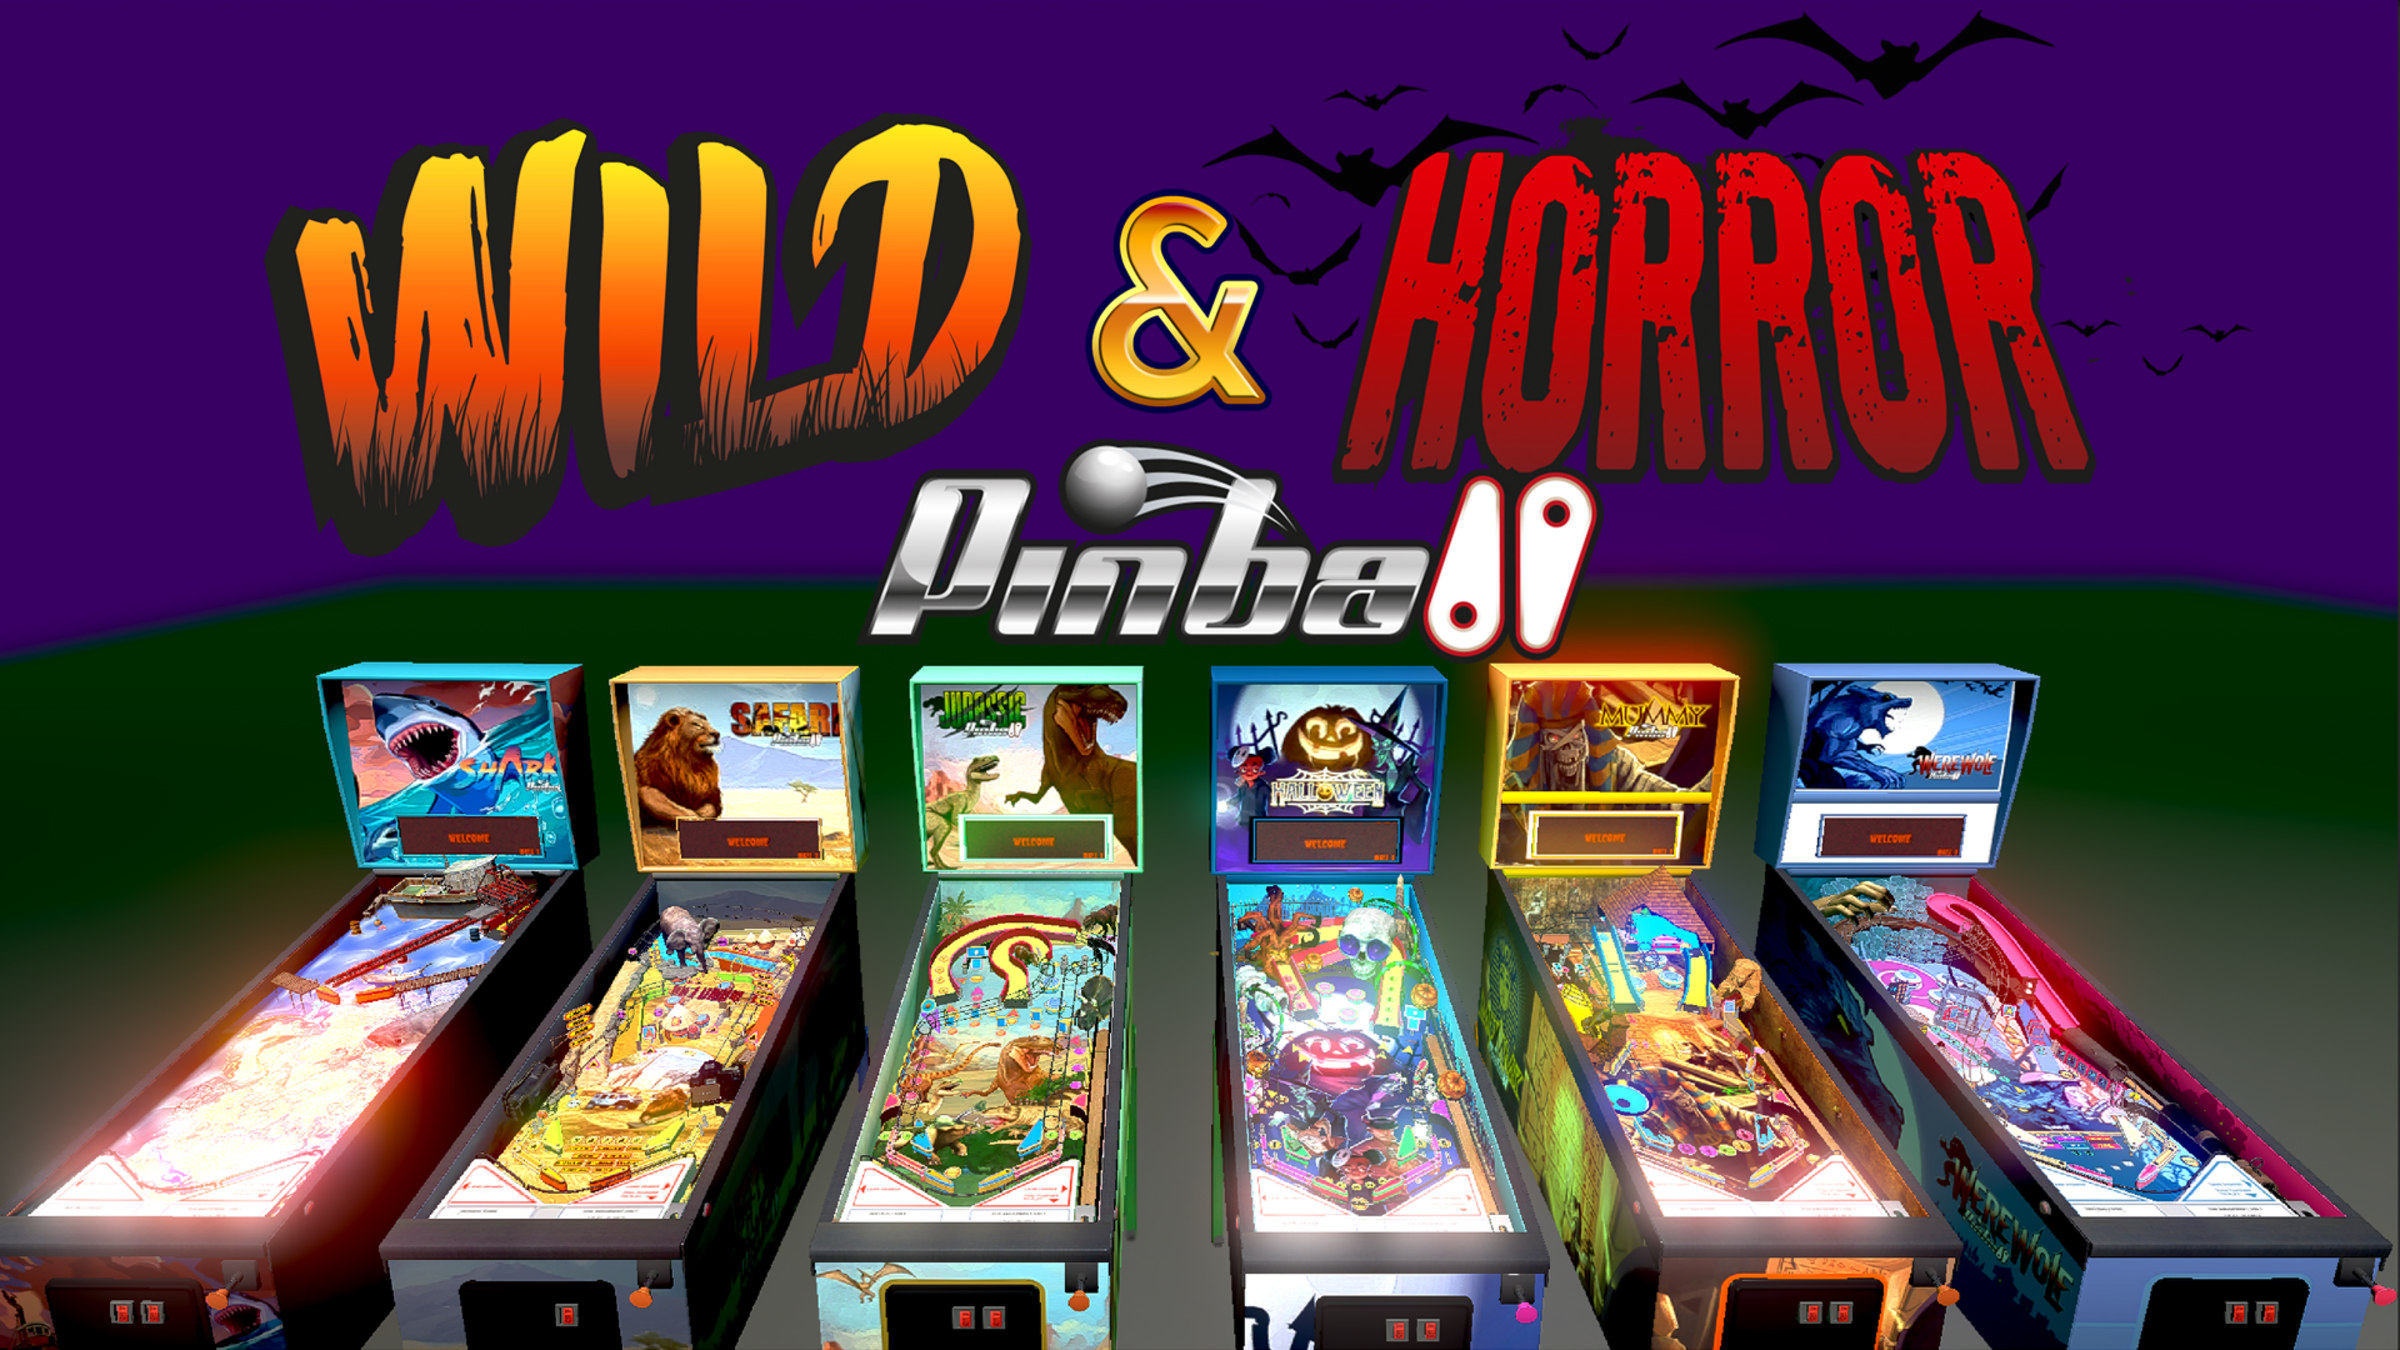 Wild & Horror Pinball for Nintendo Switch - Nintendo Official Site